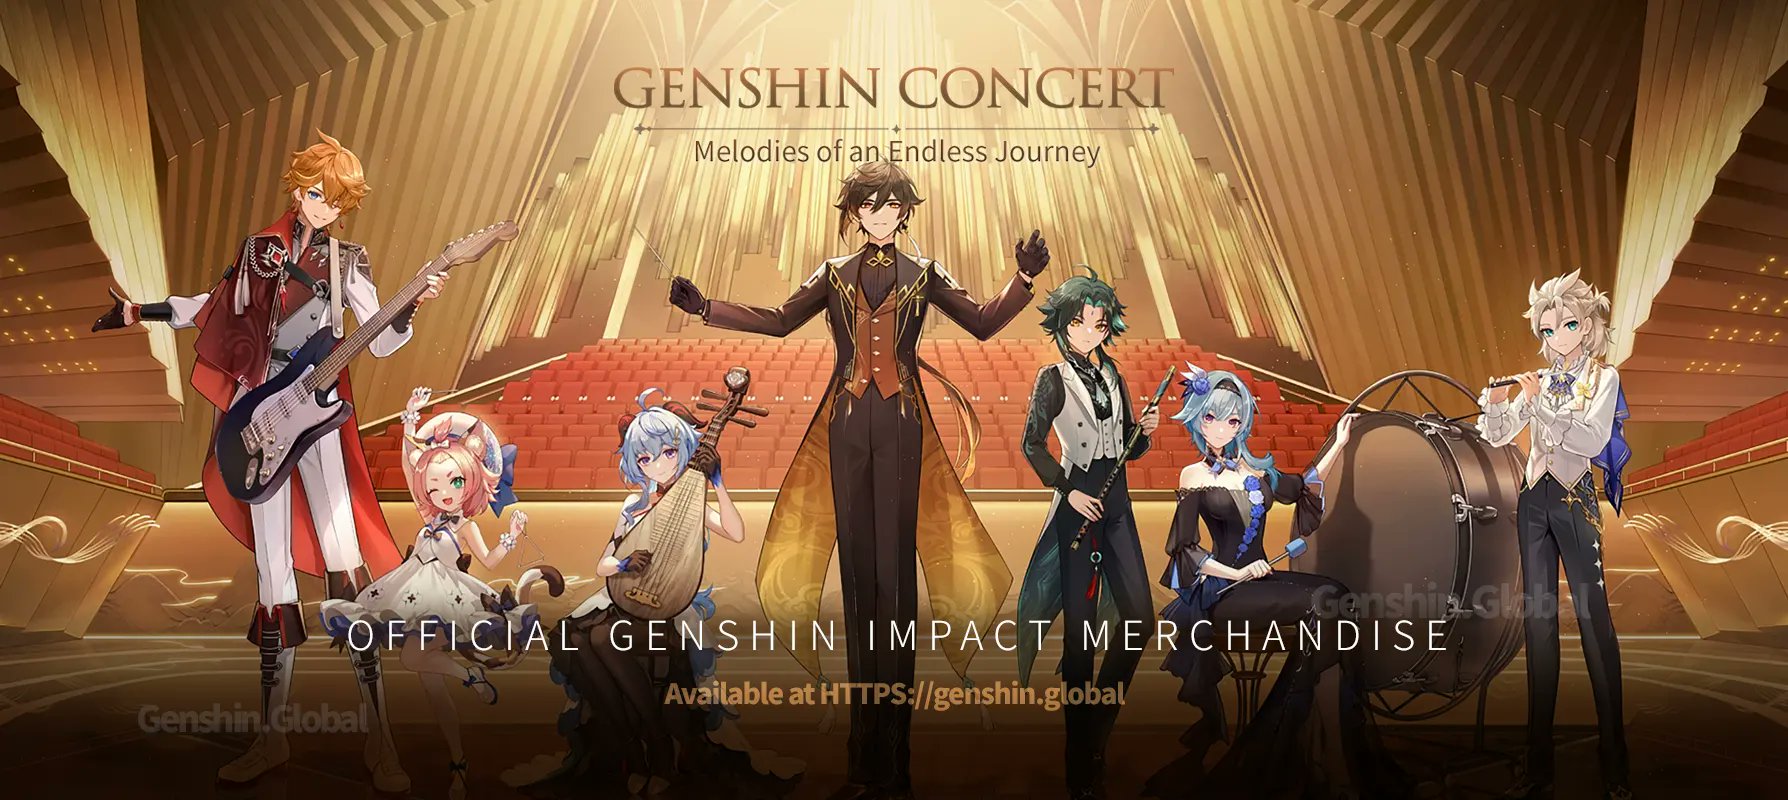 Genshin's Global Impact